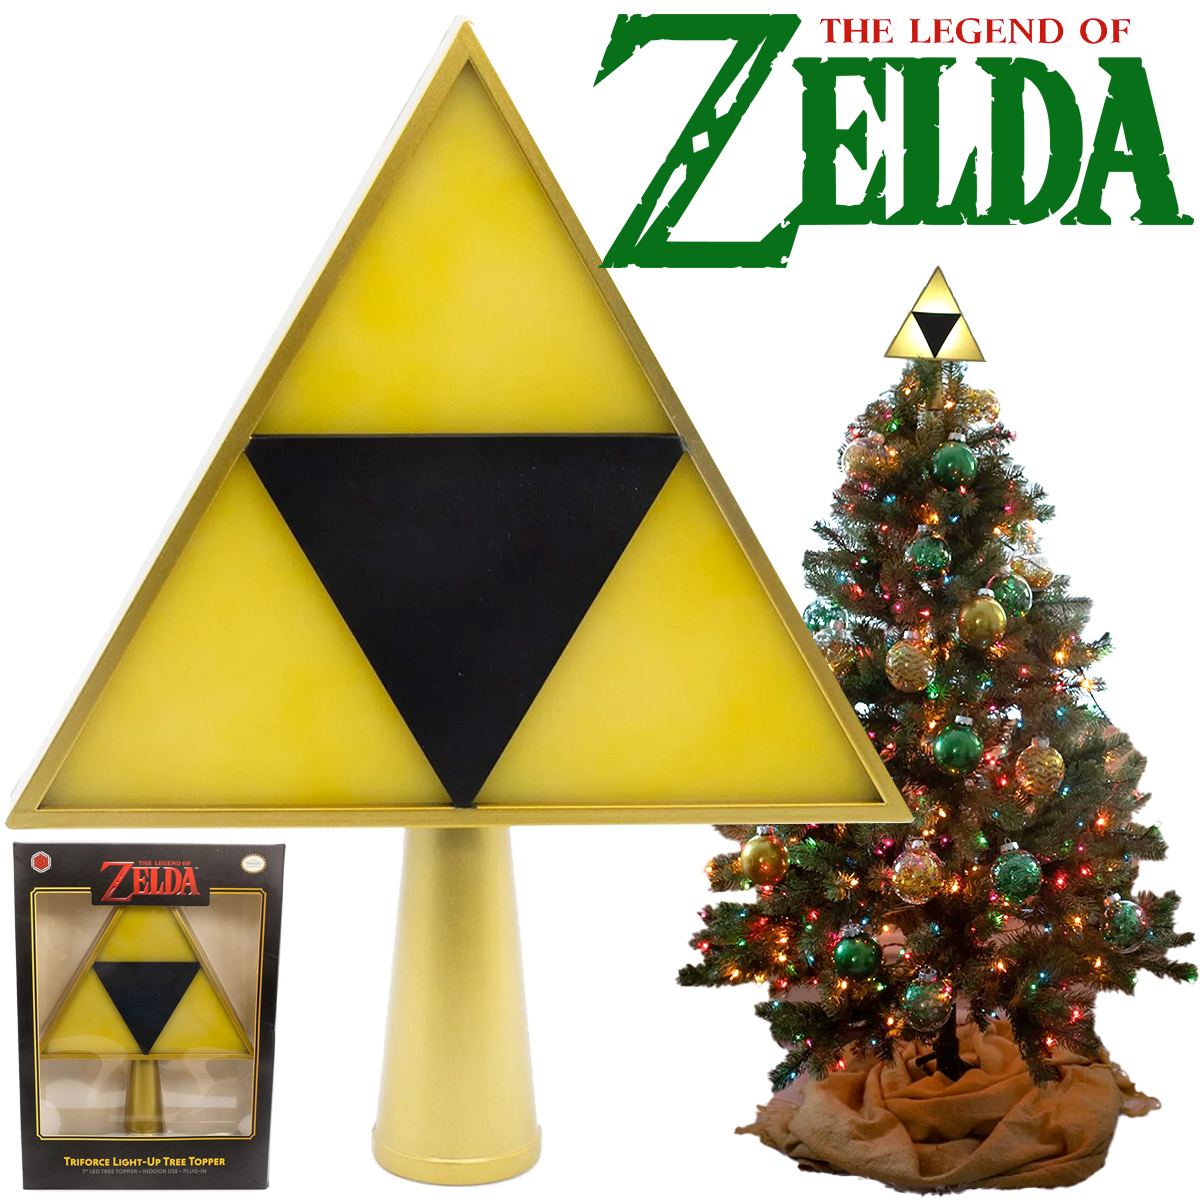 Estrela Triforce Legend of Zelda para decorar a Árvore de Natal no Estilo Hyrule